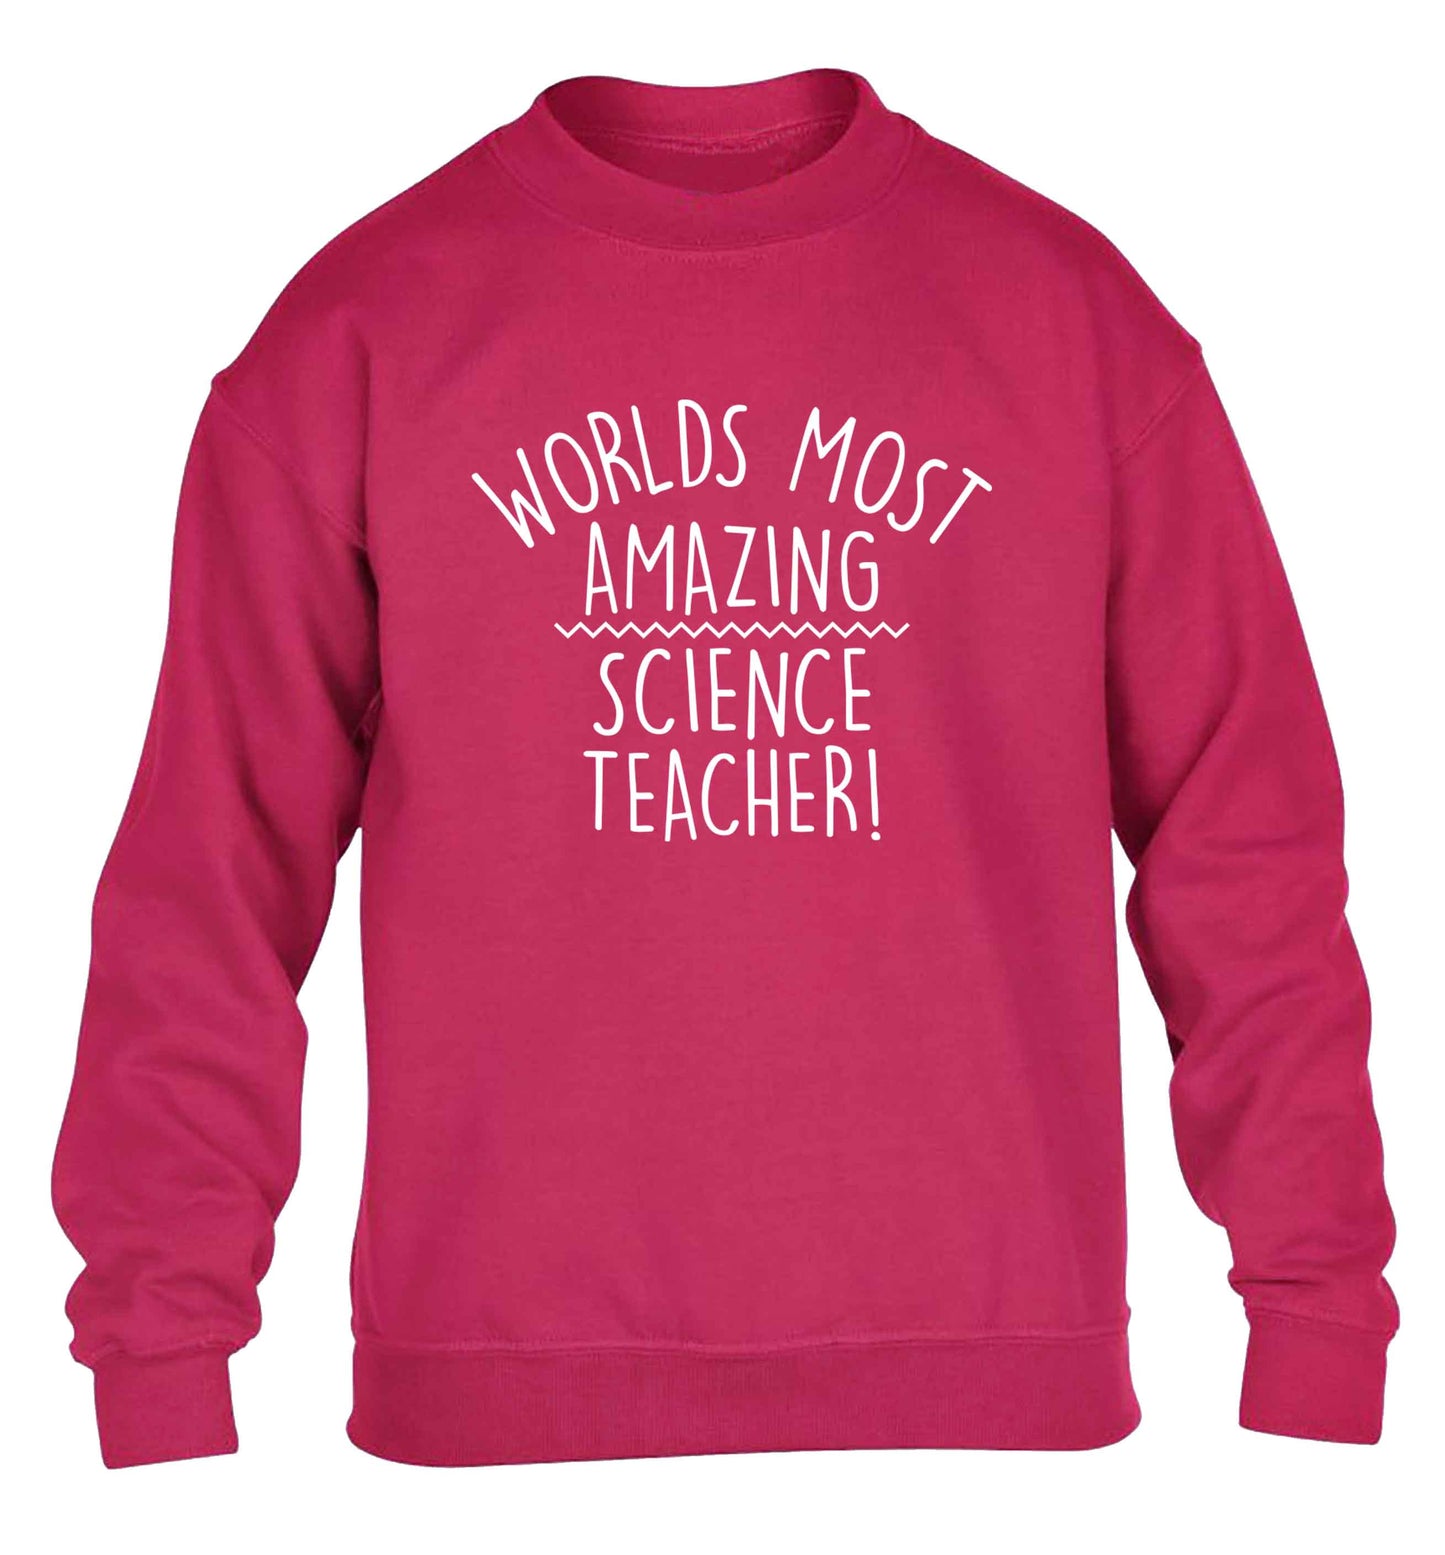 Worlds most amazing science teacher children's pink sweater 12-13 Years